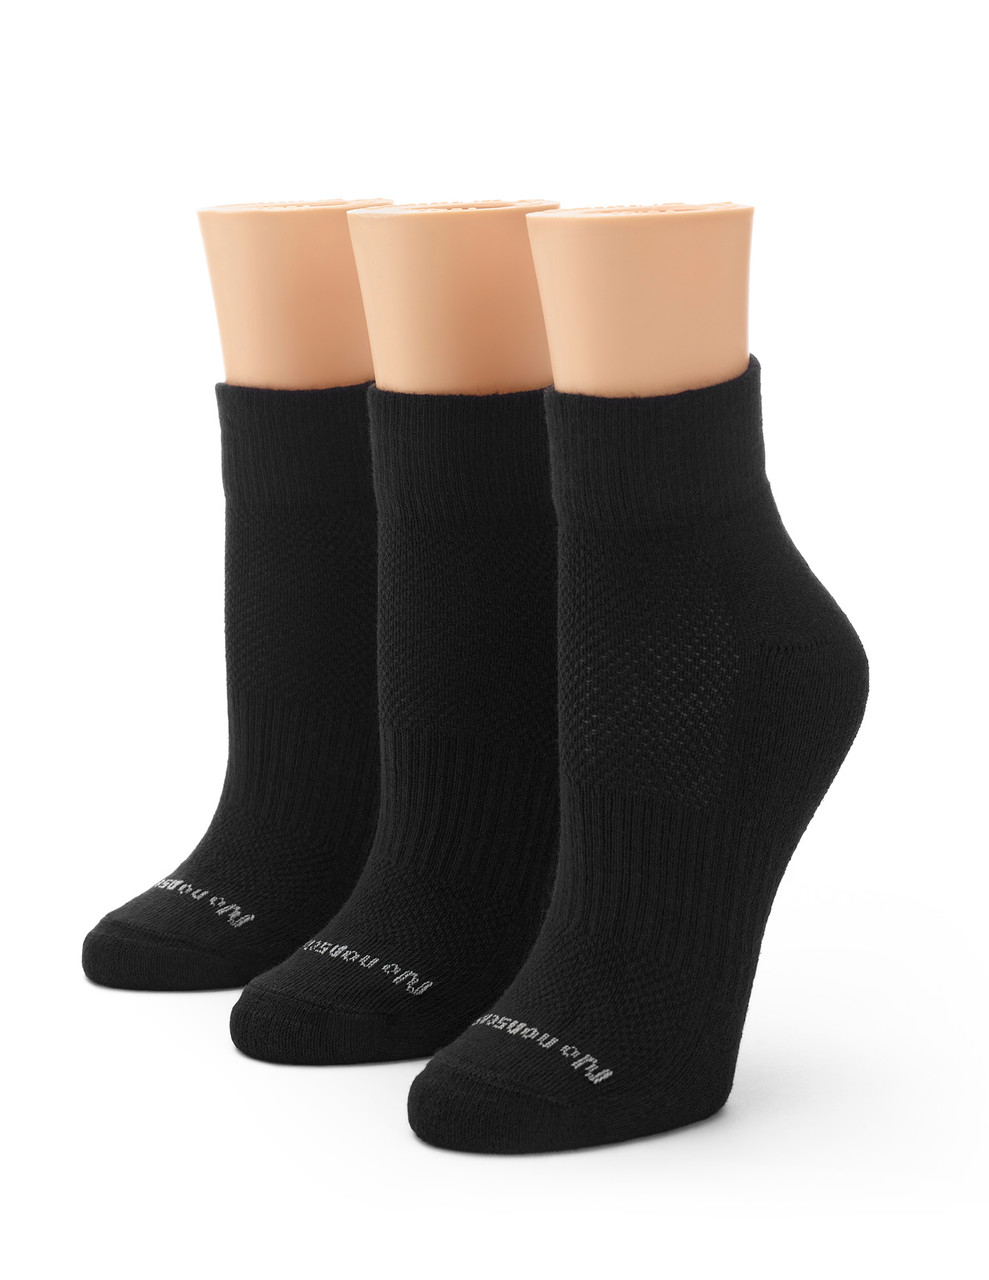 No Nonsense Nylon Knee Highs, Sheer Toe, Size One, Off Black - 10 pair